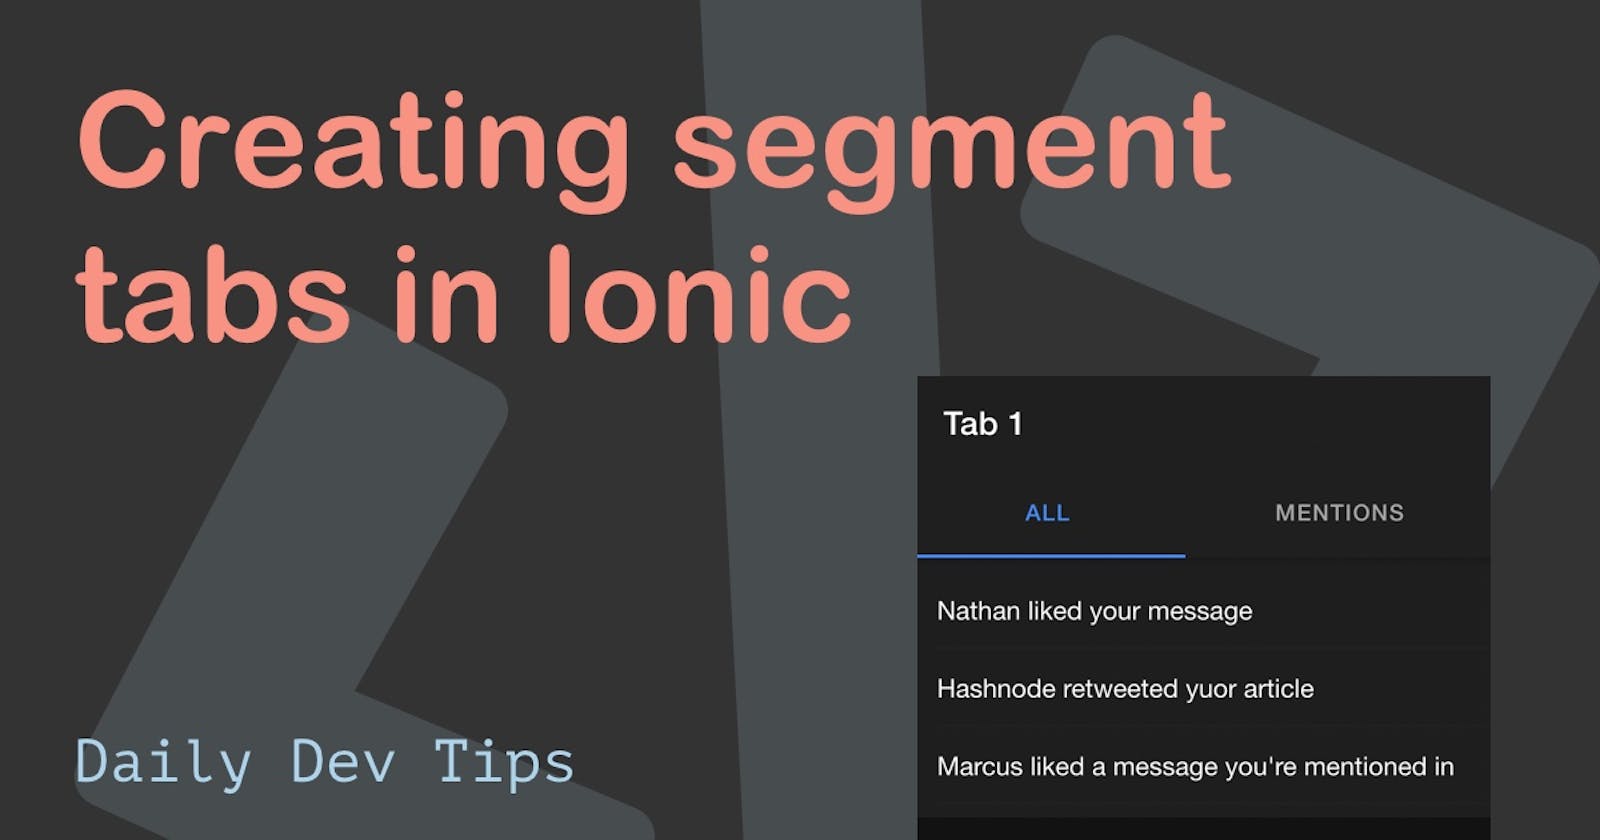 Creating segment tabs in Ionic